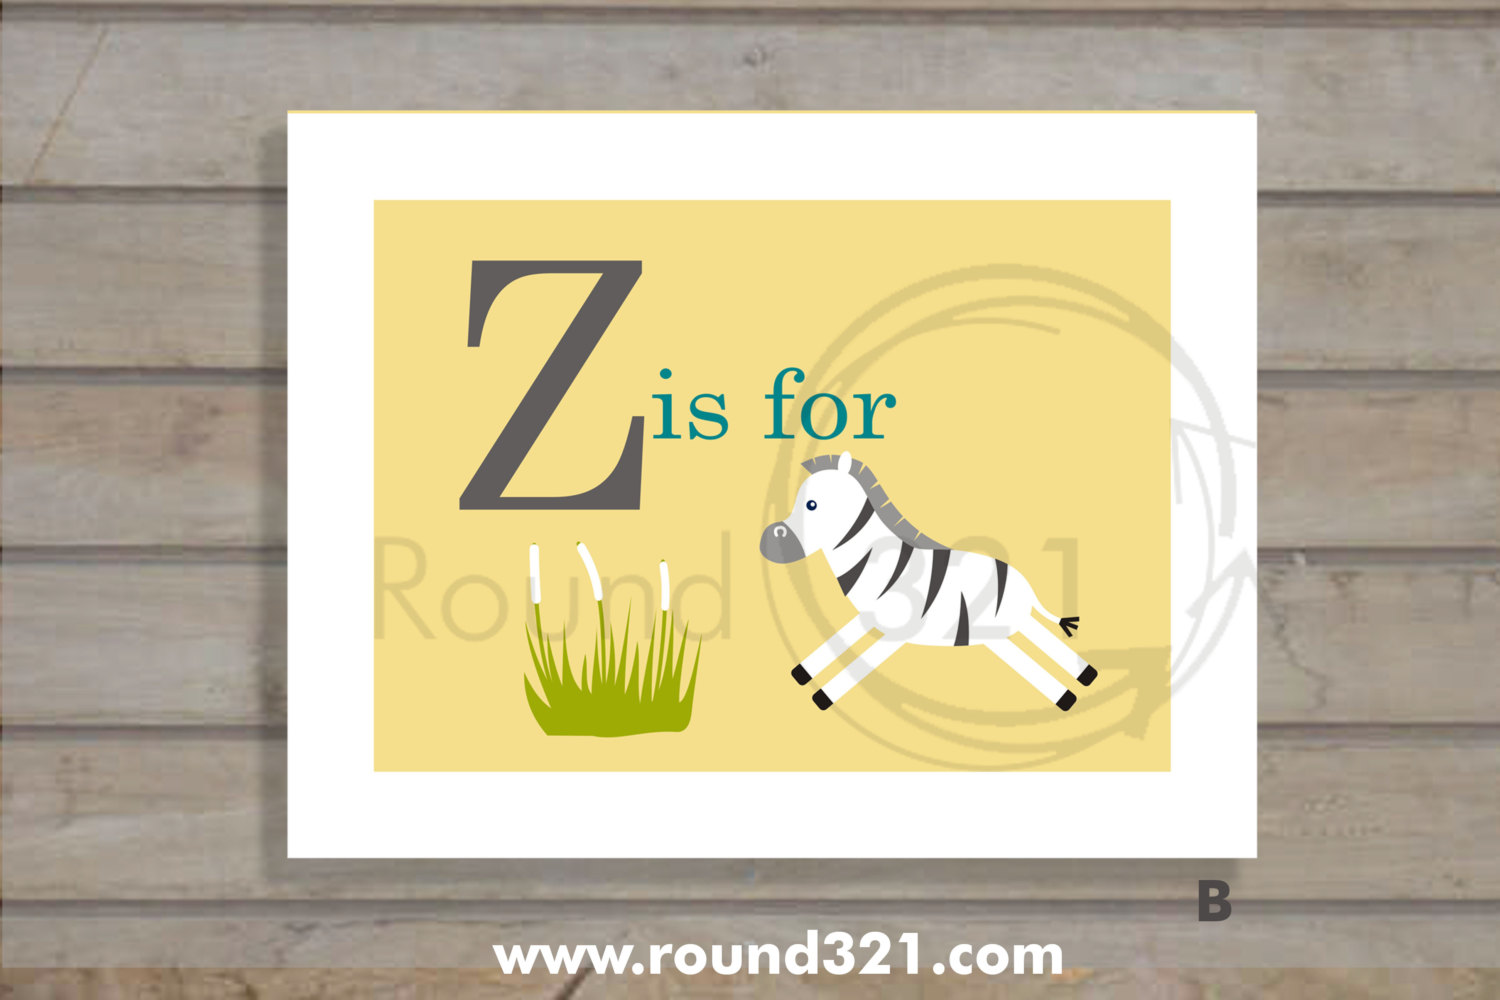 Personalized Name with Zebra Print Background Round321com